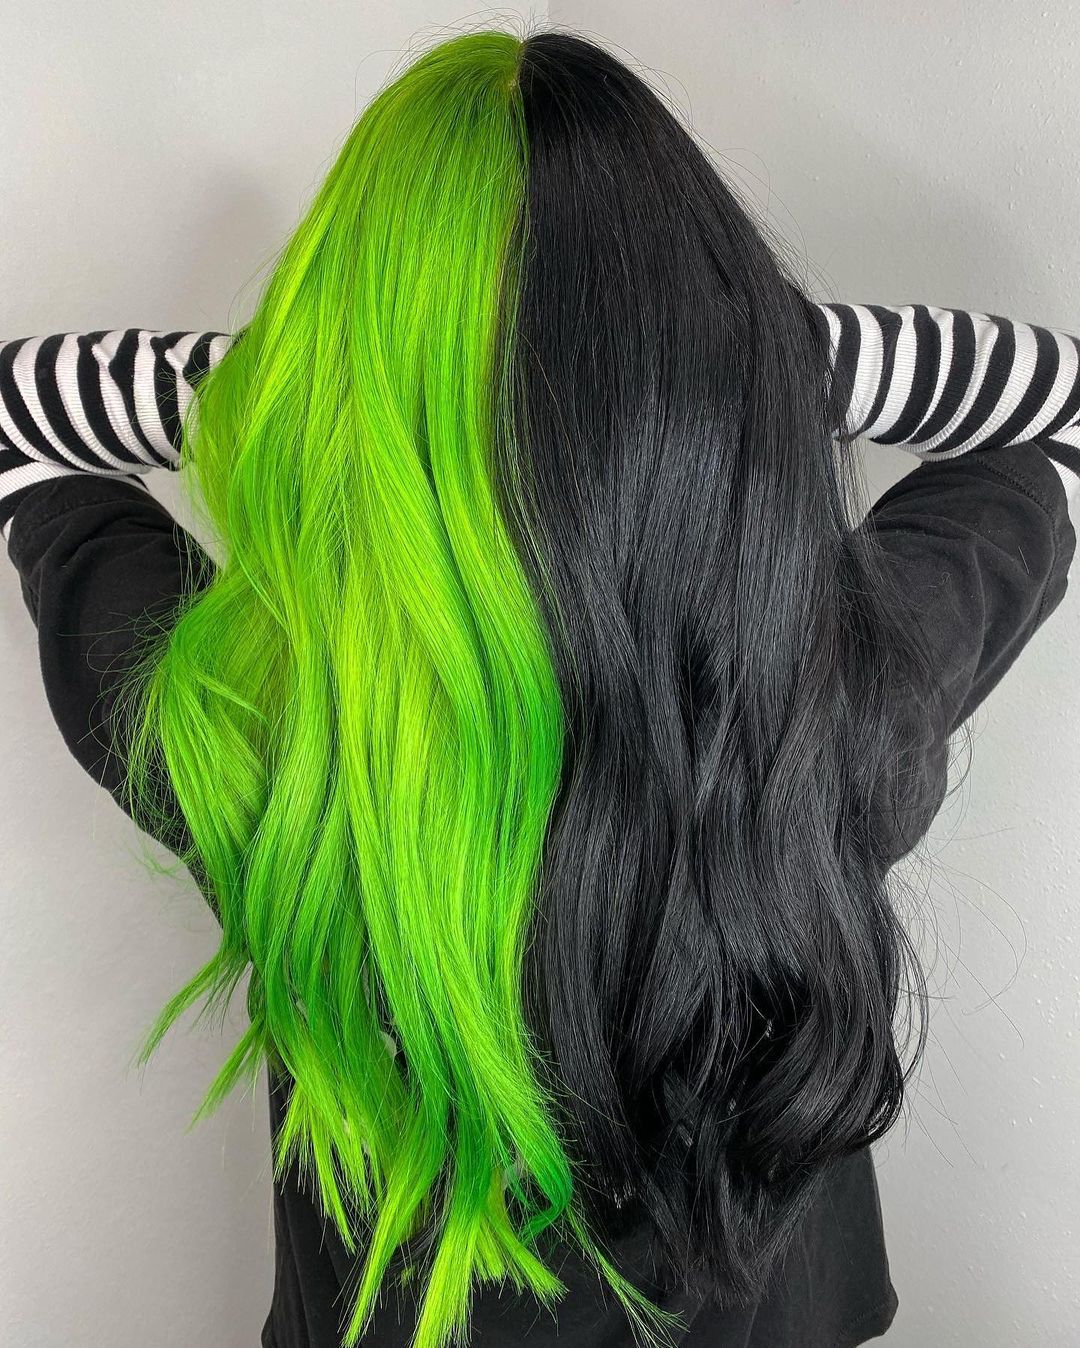 Split Black and Green Hair